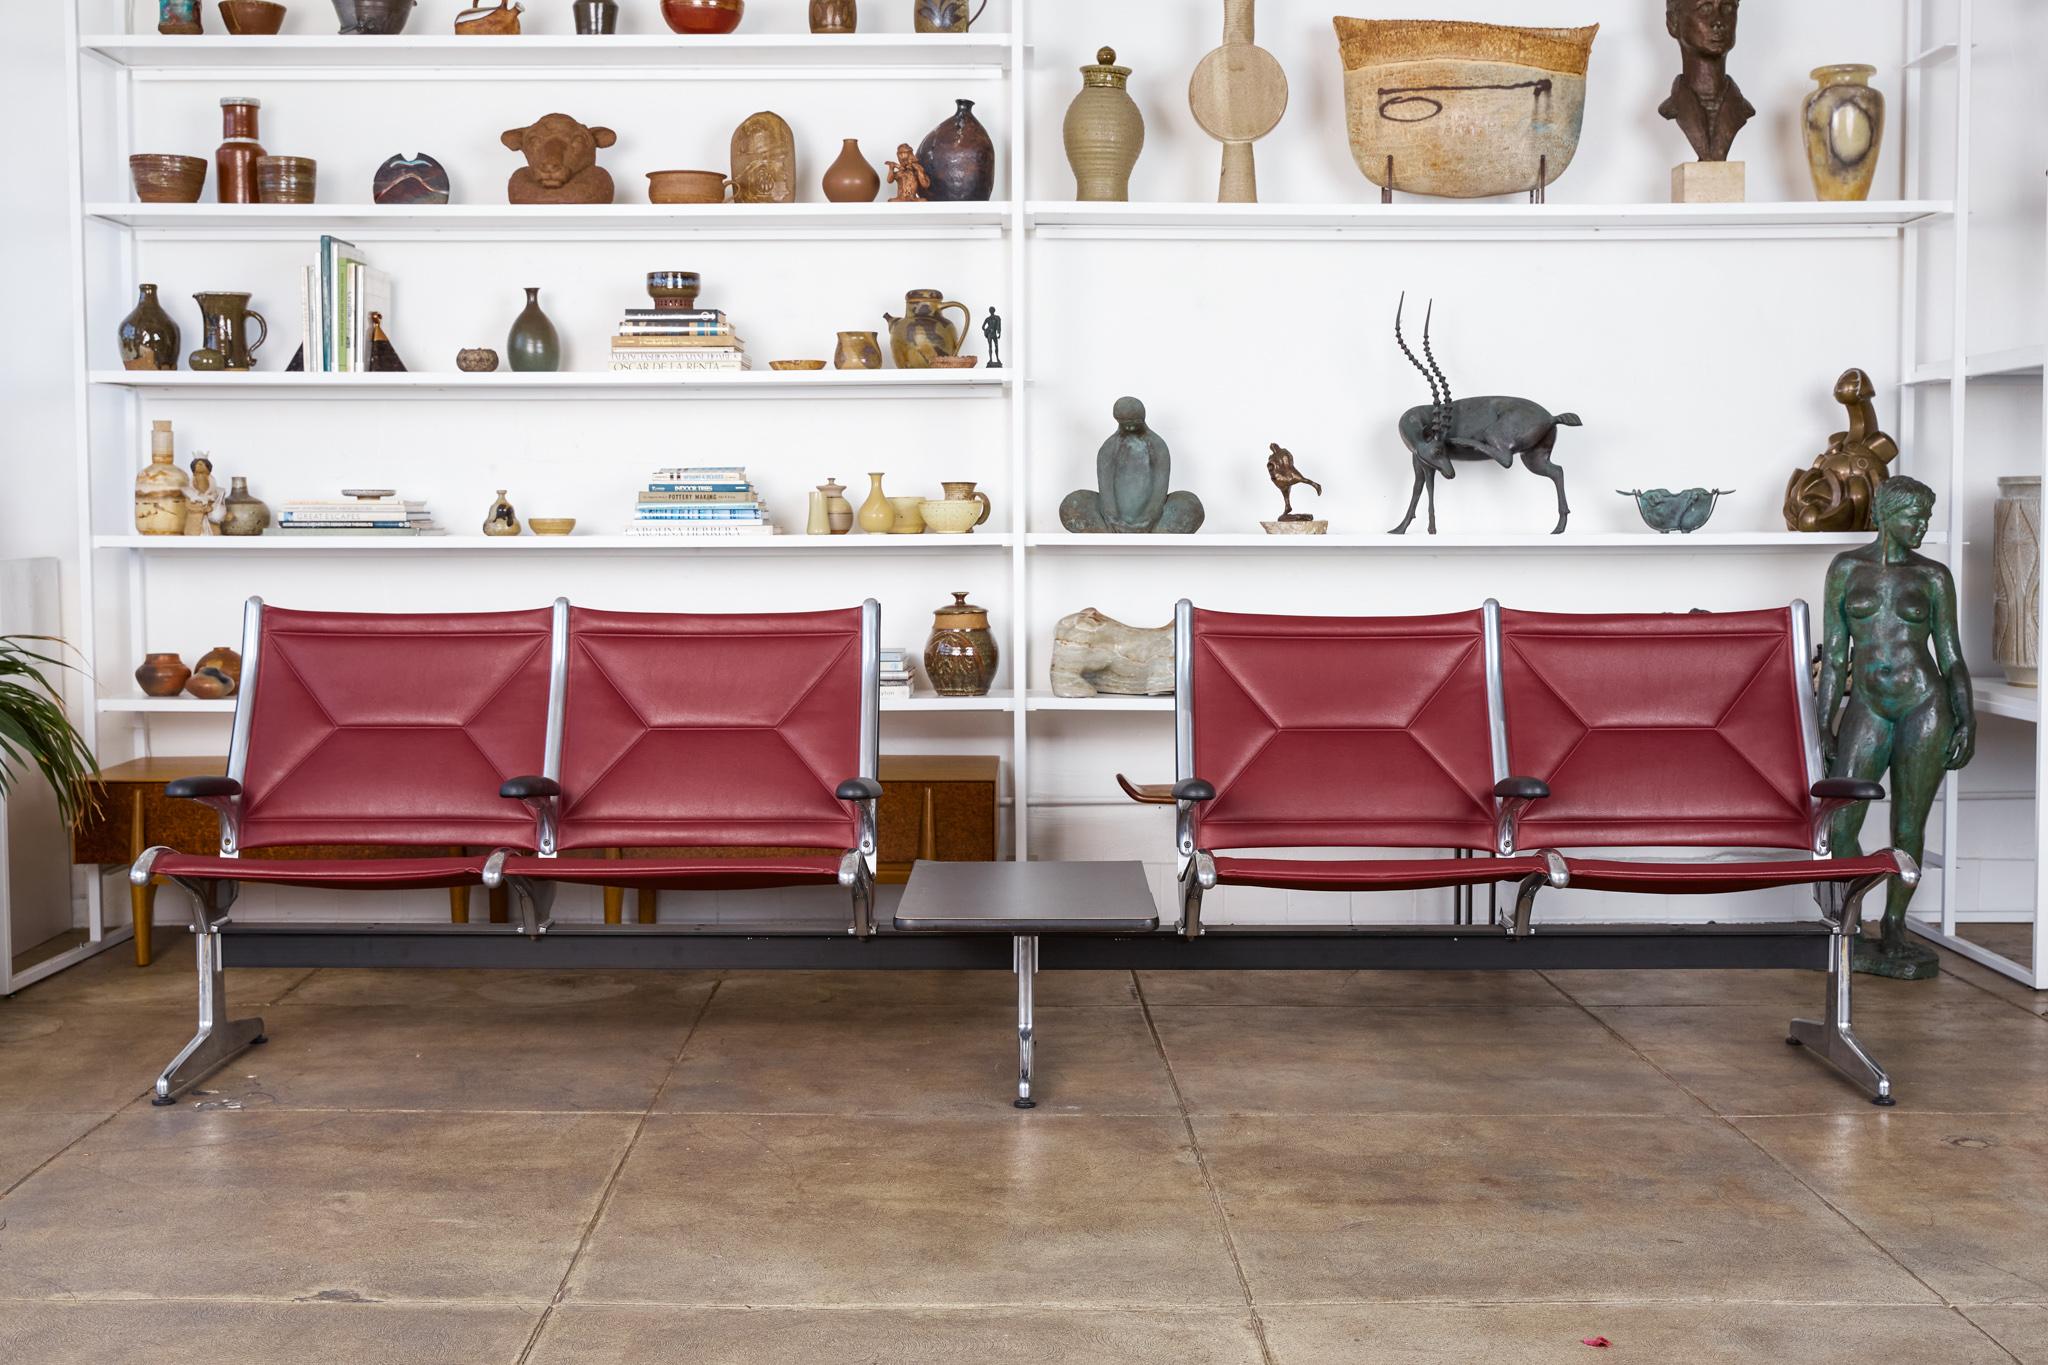 American Eames for Herman Miller Seating System in Burgundy